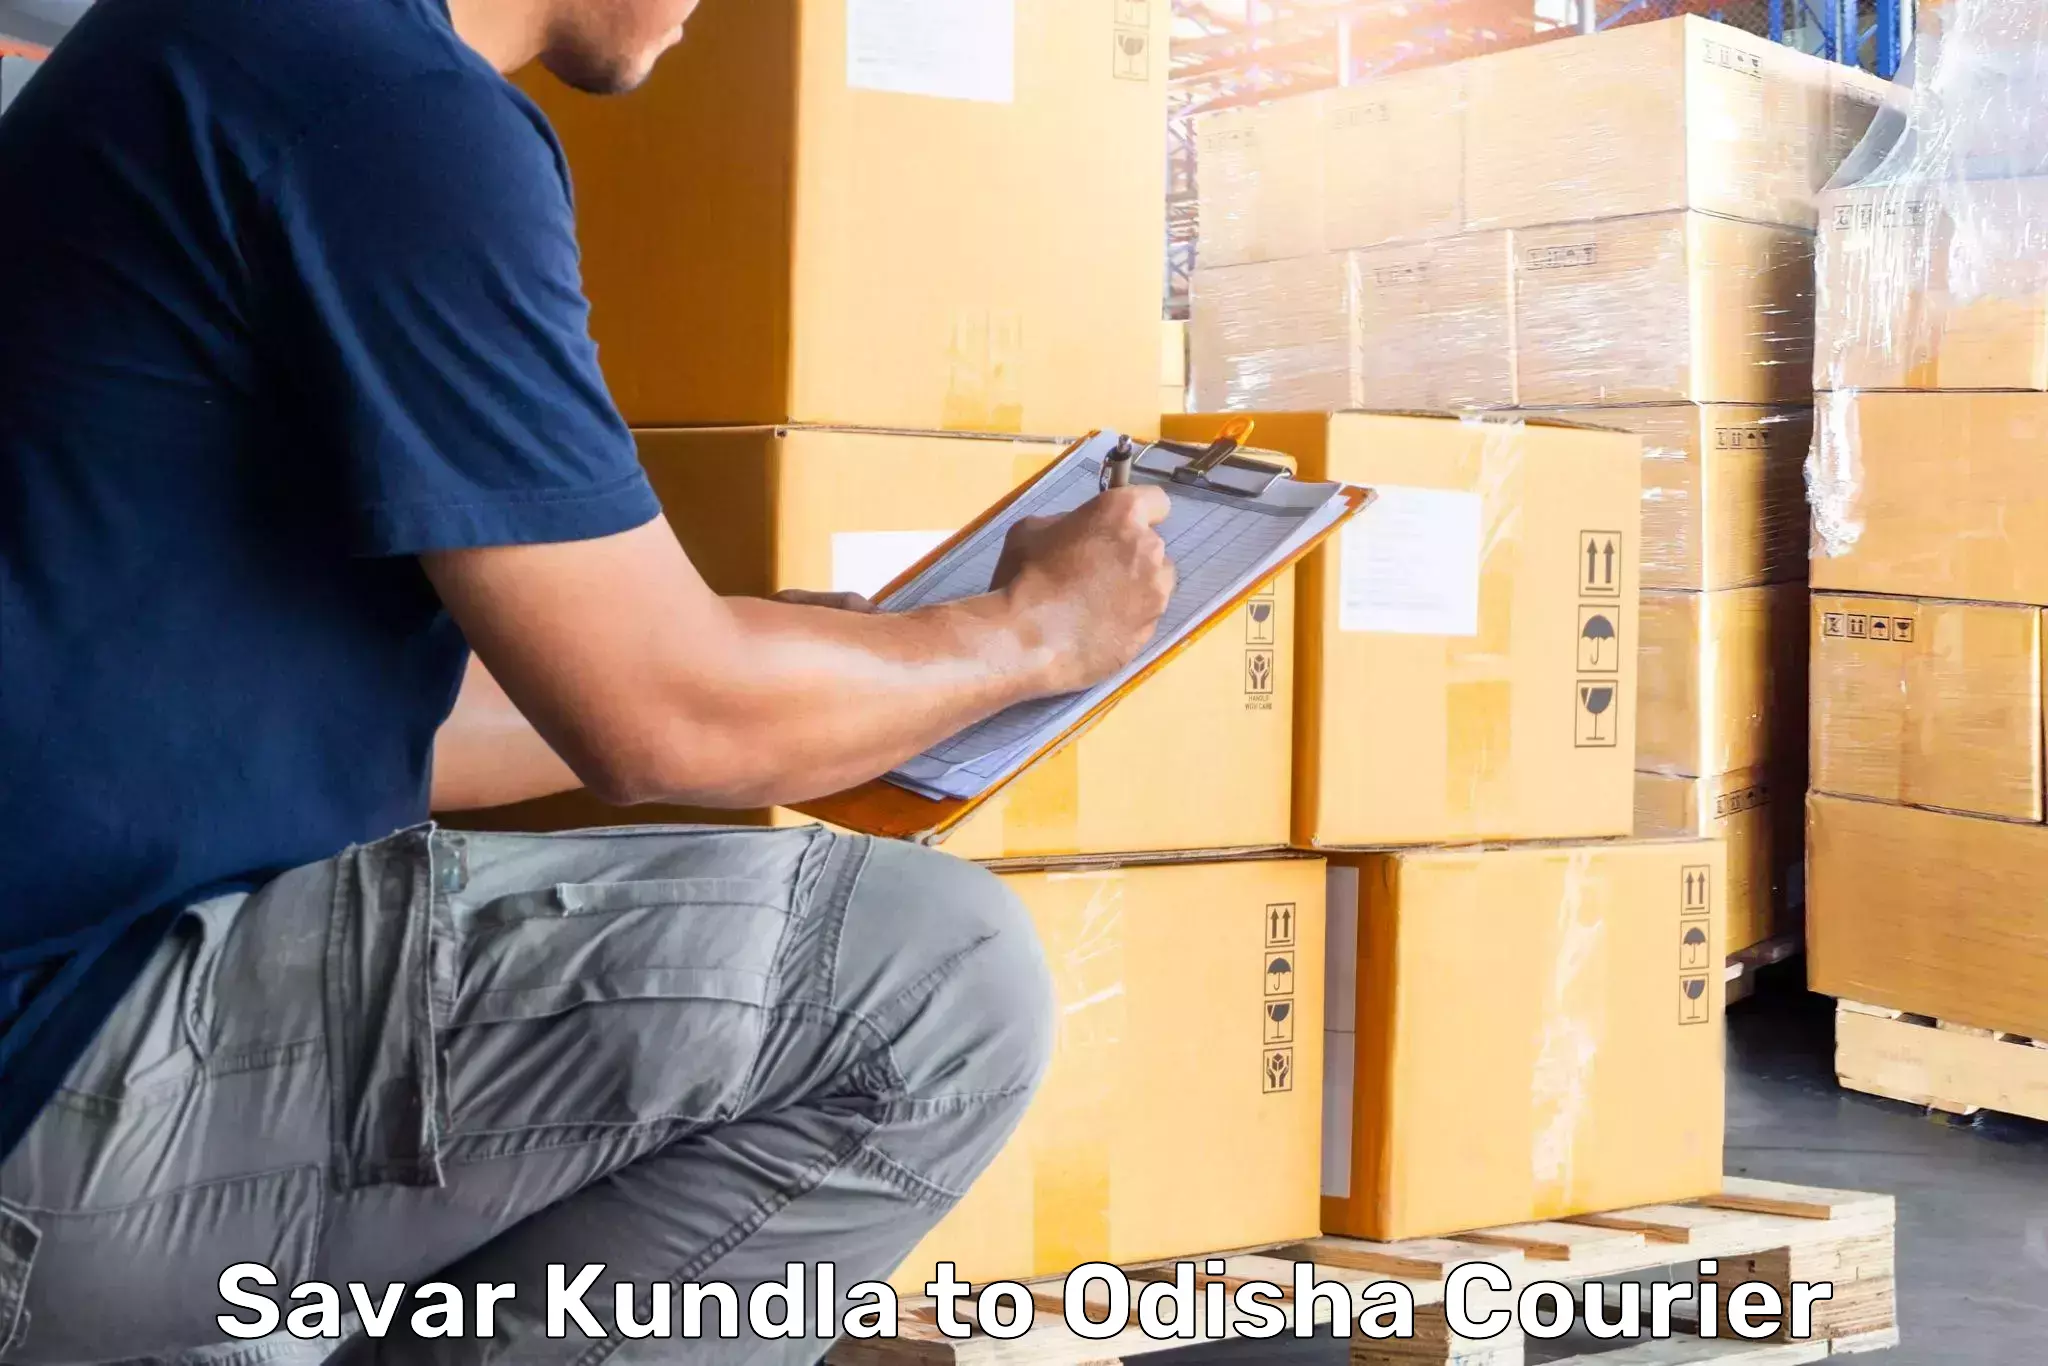 Luggage delivery app Savar Kundla to Balinga